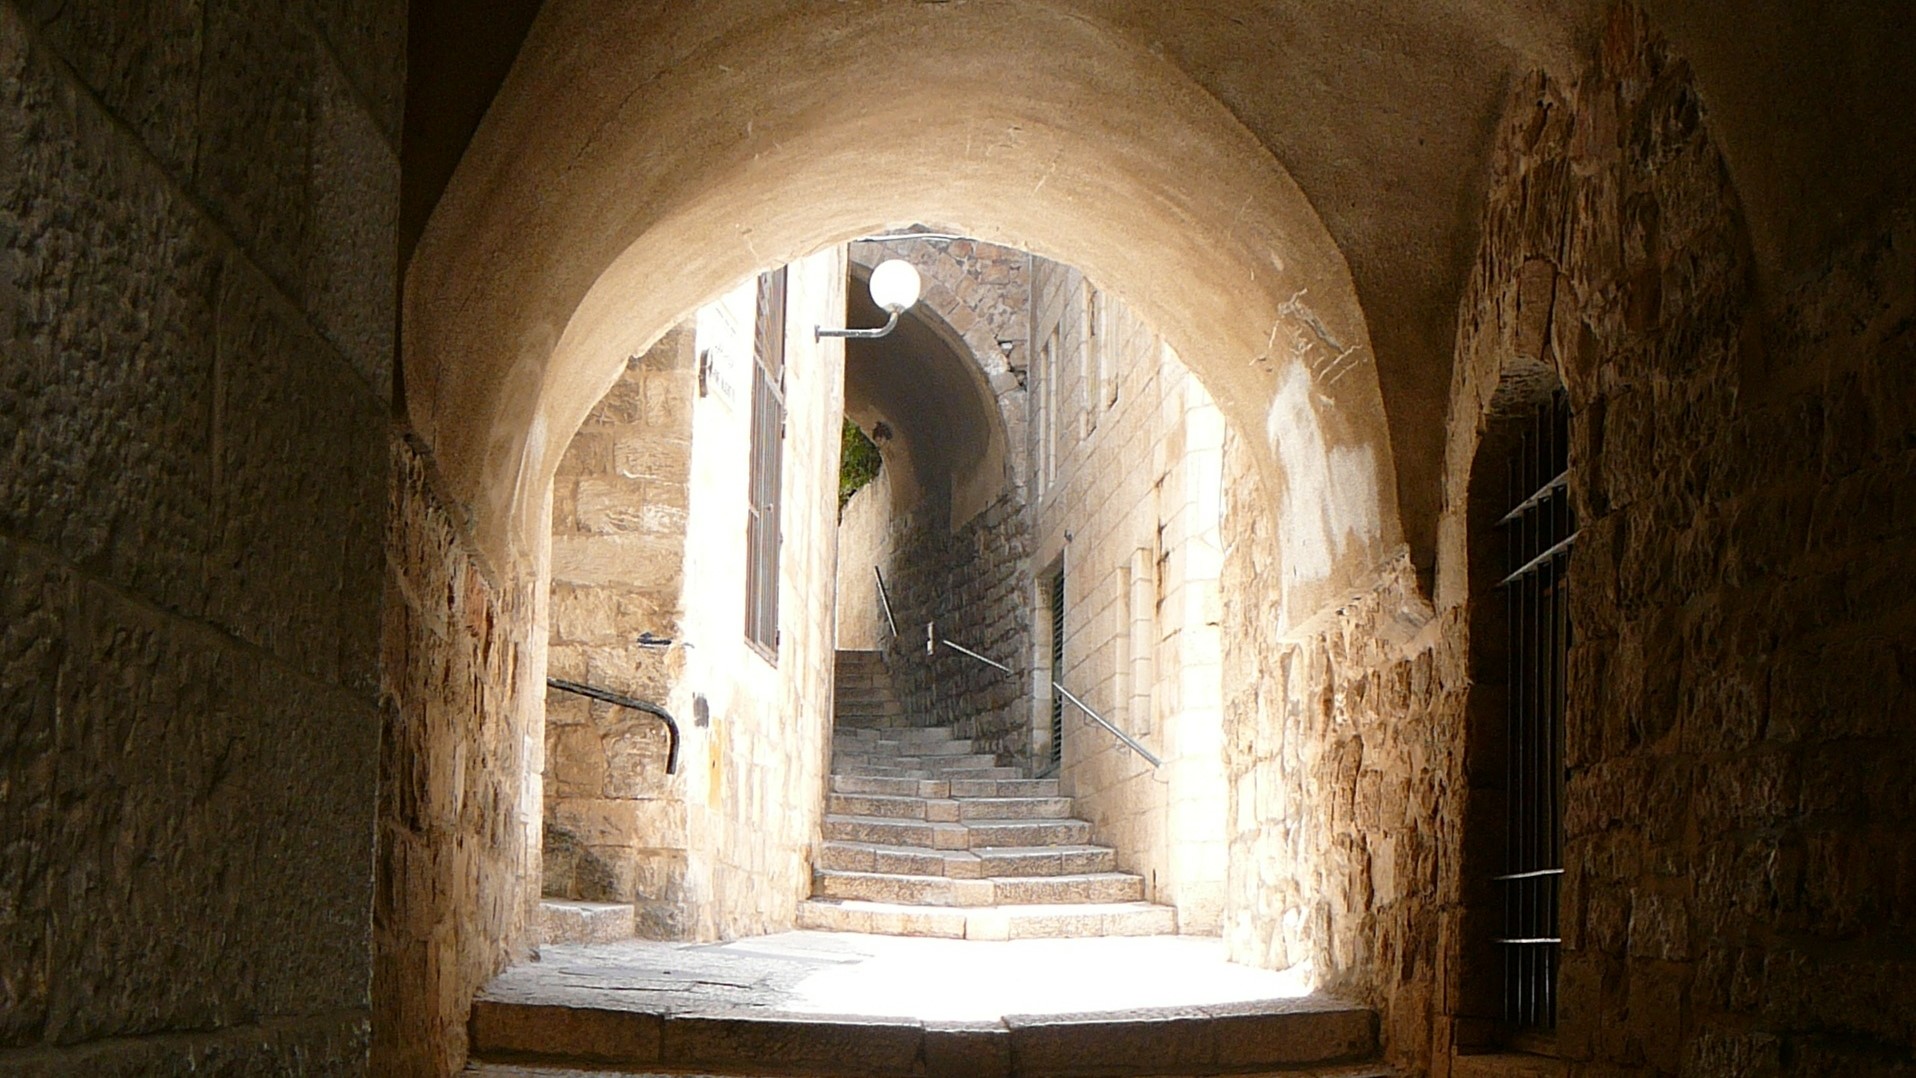 Старый город Иерусалима